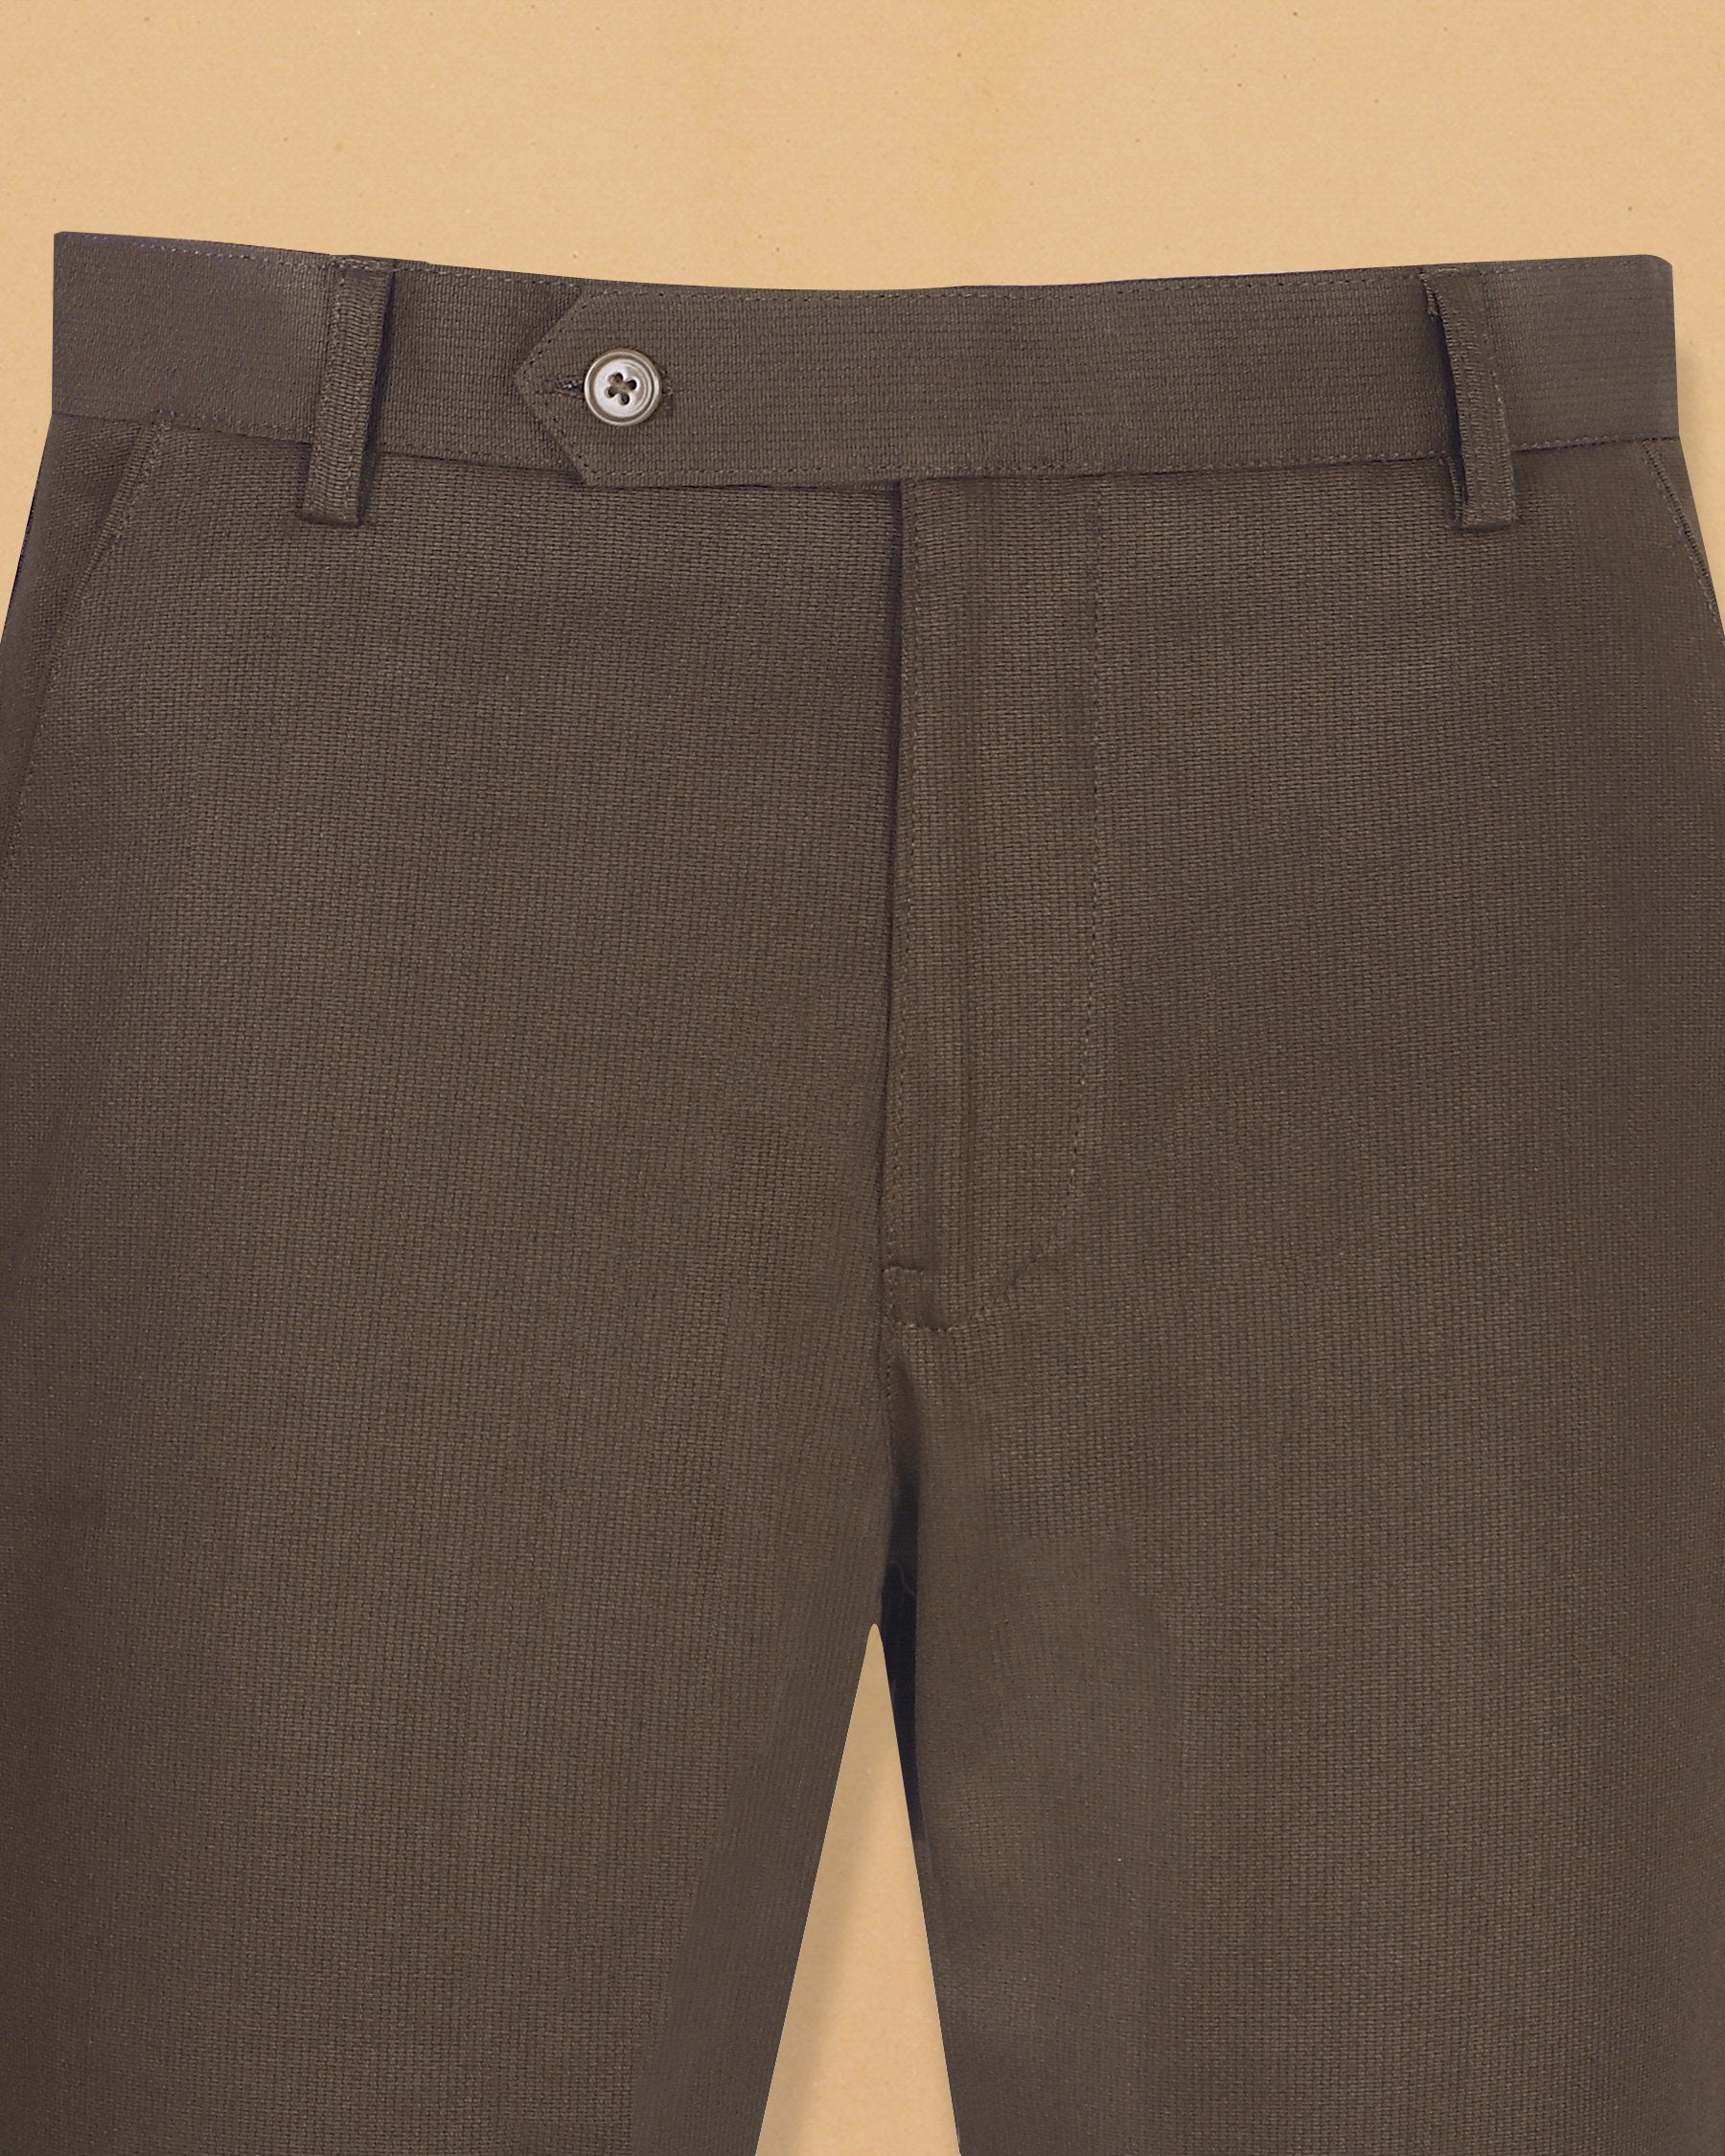 Mocha Brown Heavyweight regular fit Cotton Pant T355-30, T355-28, T355-34, T355-32